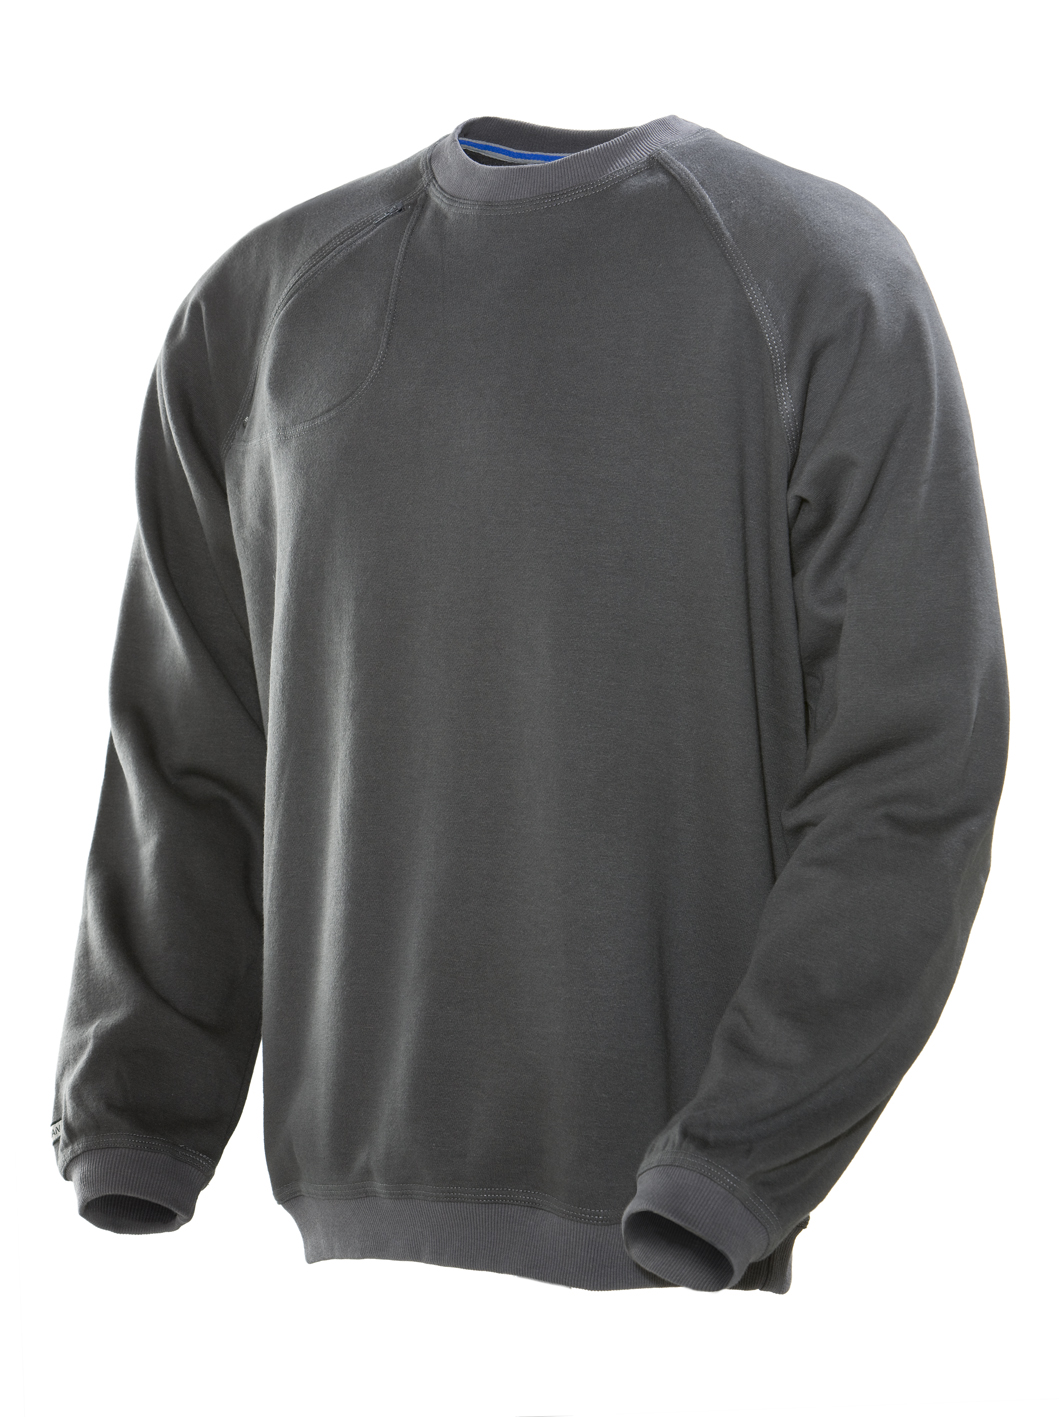 5122 Sweatshirt S gris antracite